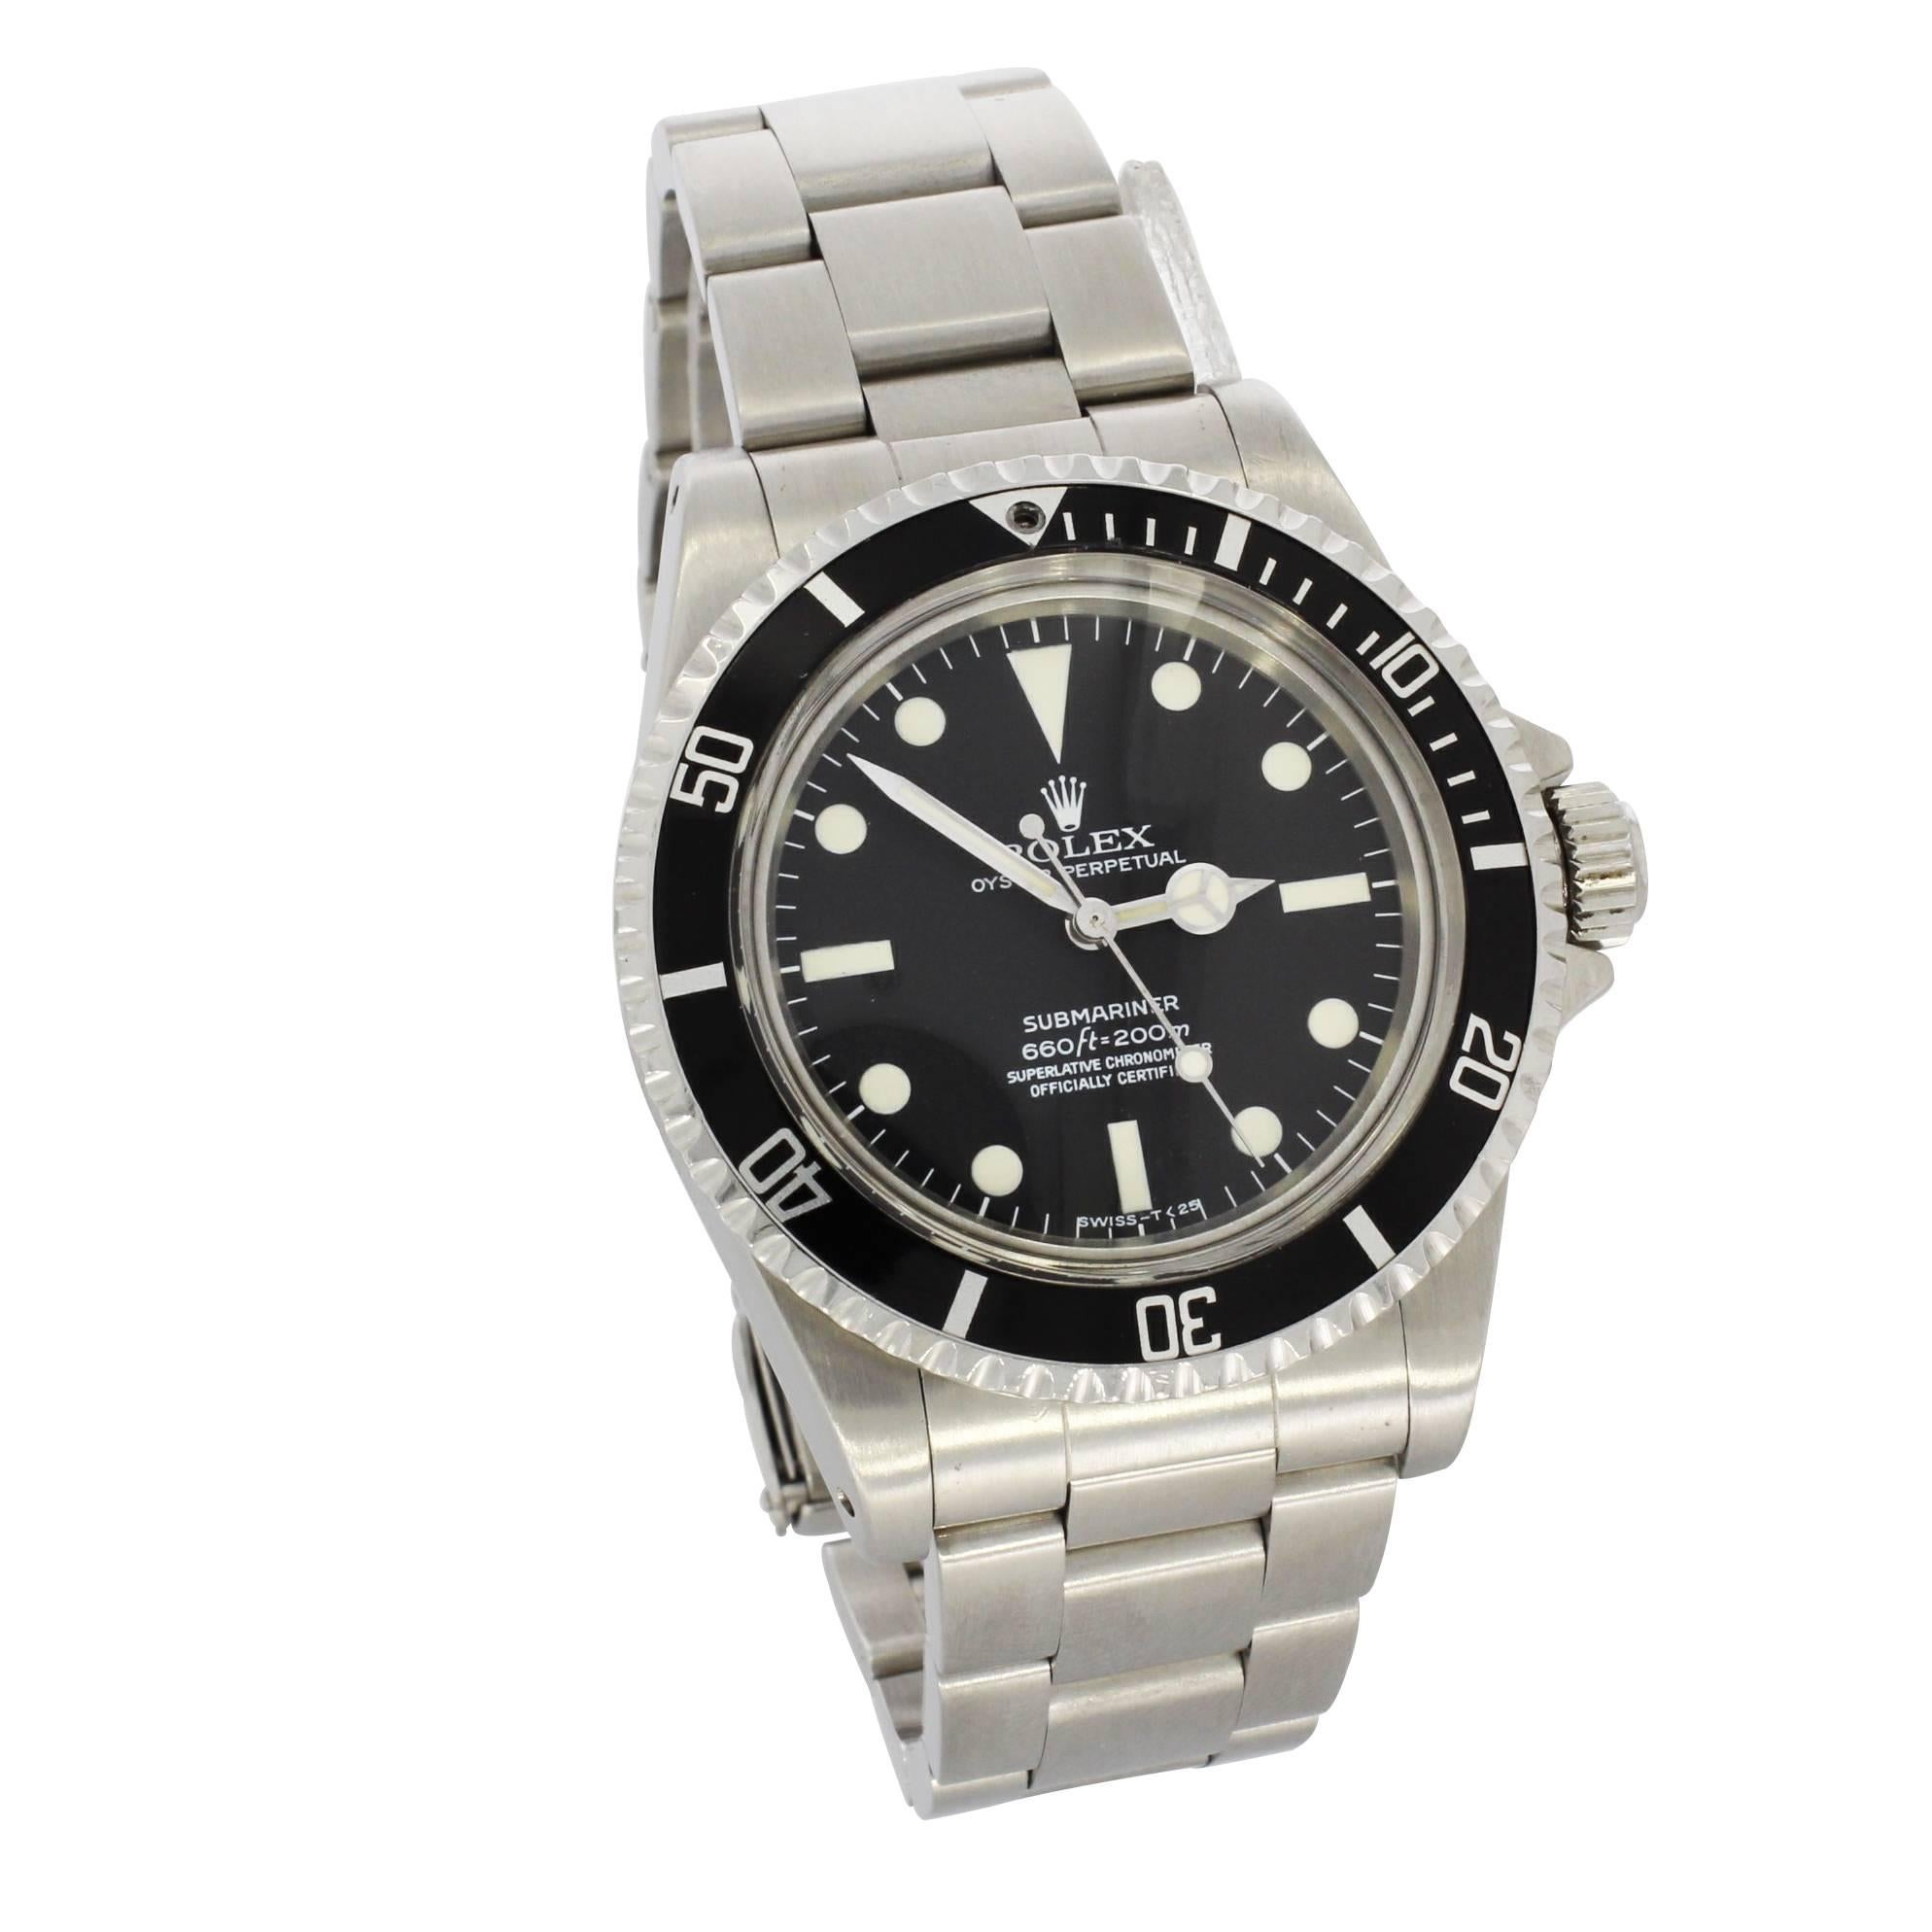 Rolex Stainless Steel Submariner Original Dial Wristwatch Ref 5512 For Sale 4